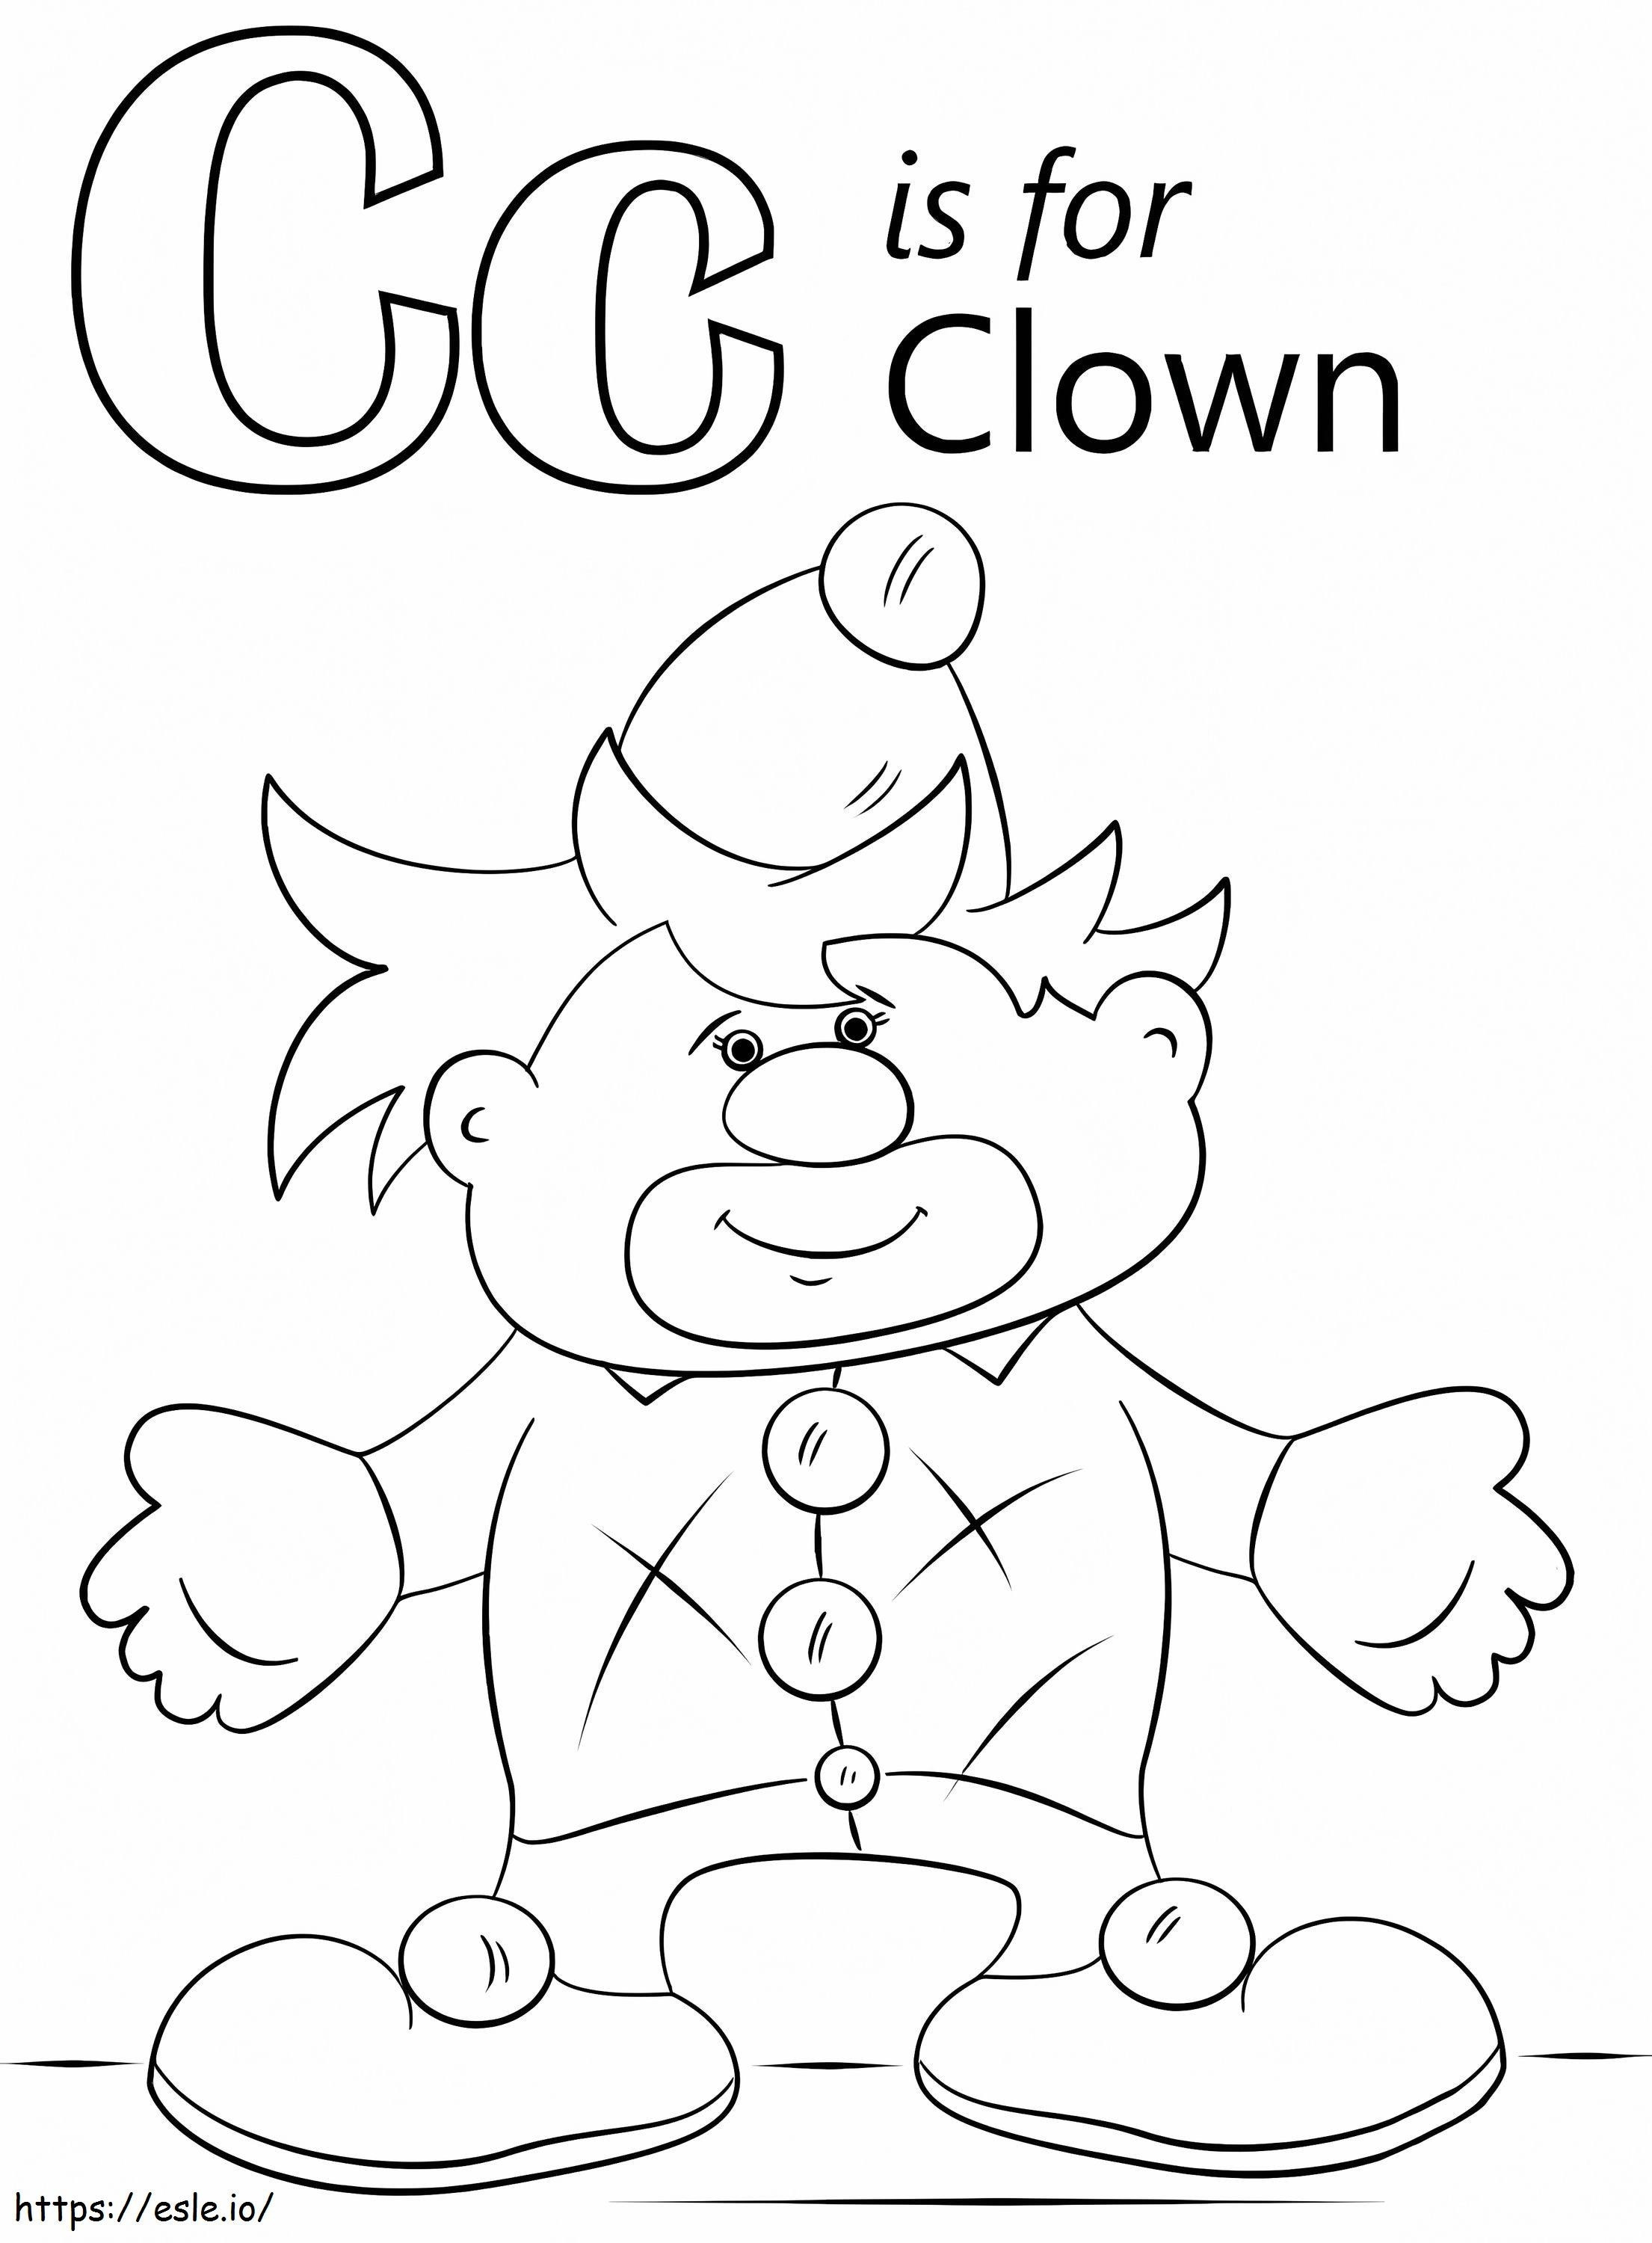 Clownsbrief C kleurplaat kleurplaat